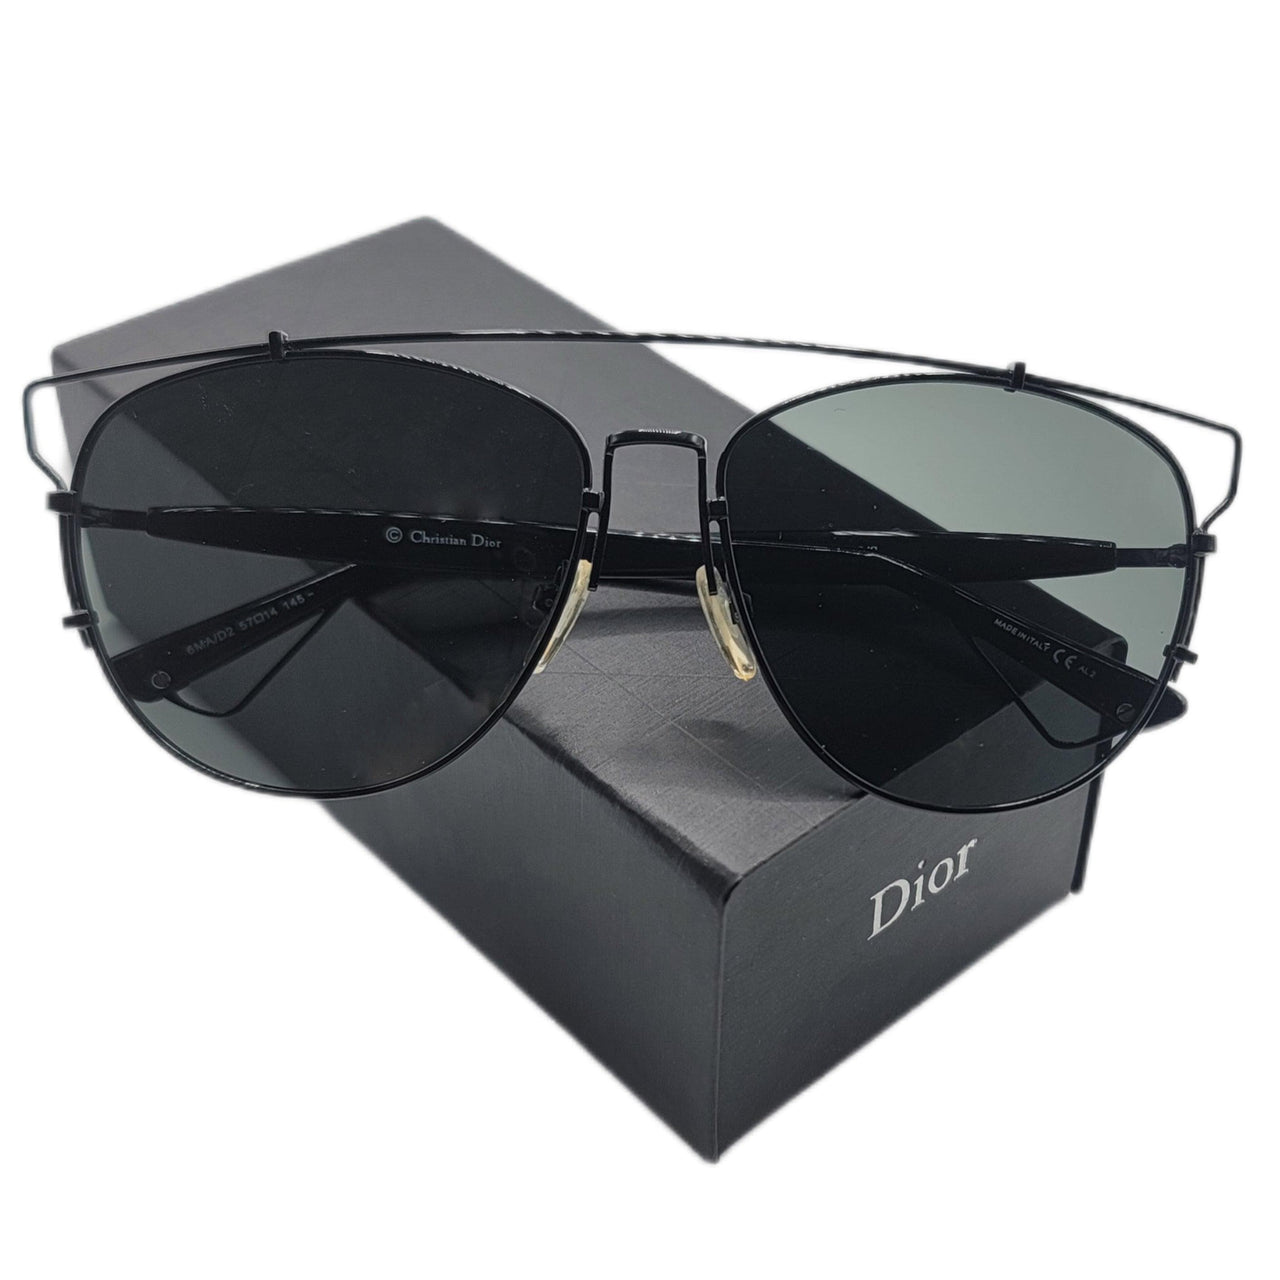 The Bag Couture Sunglasses Christian Dior Sunglasses Black